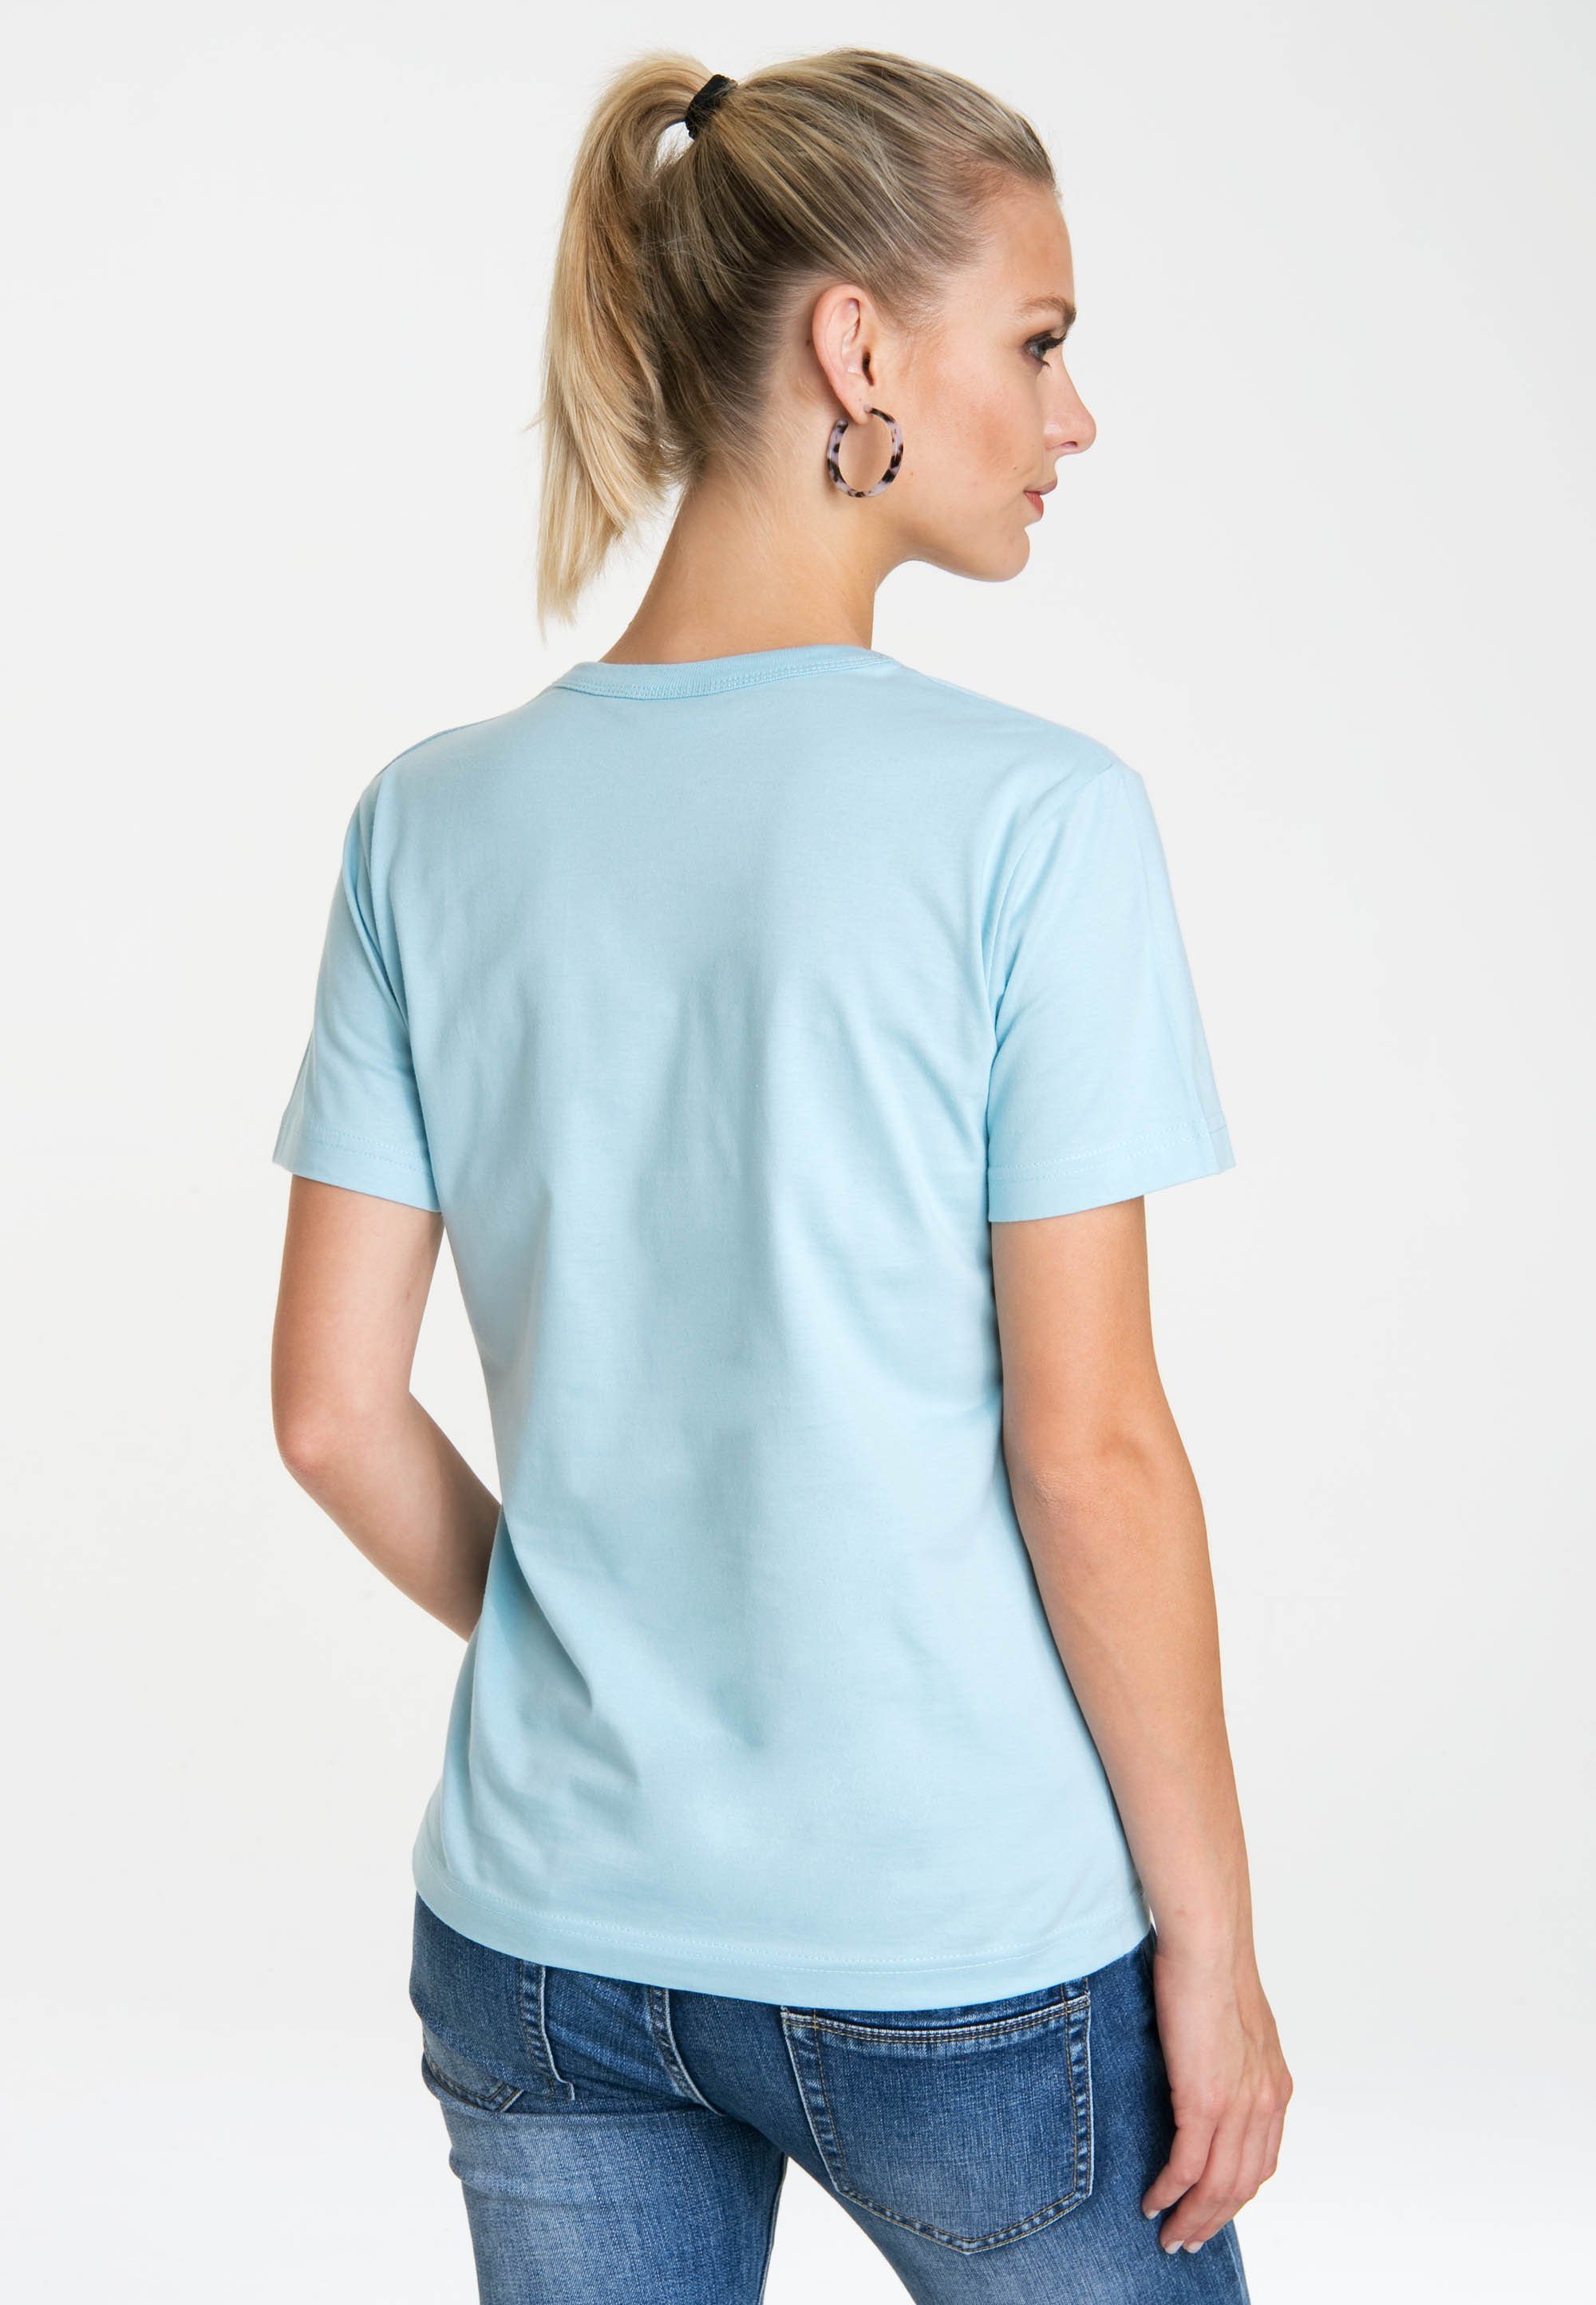 - Sesamstrasse Krümelmonster Originalddesign hellblau T-Shirt LOGOSHIRT mit lizenziertem